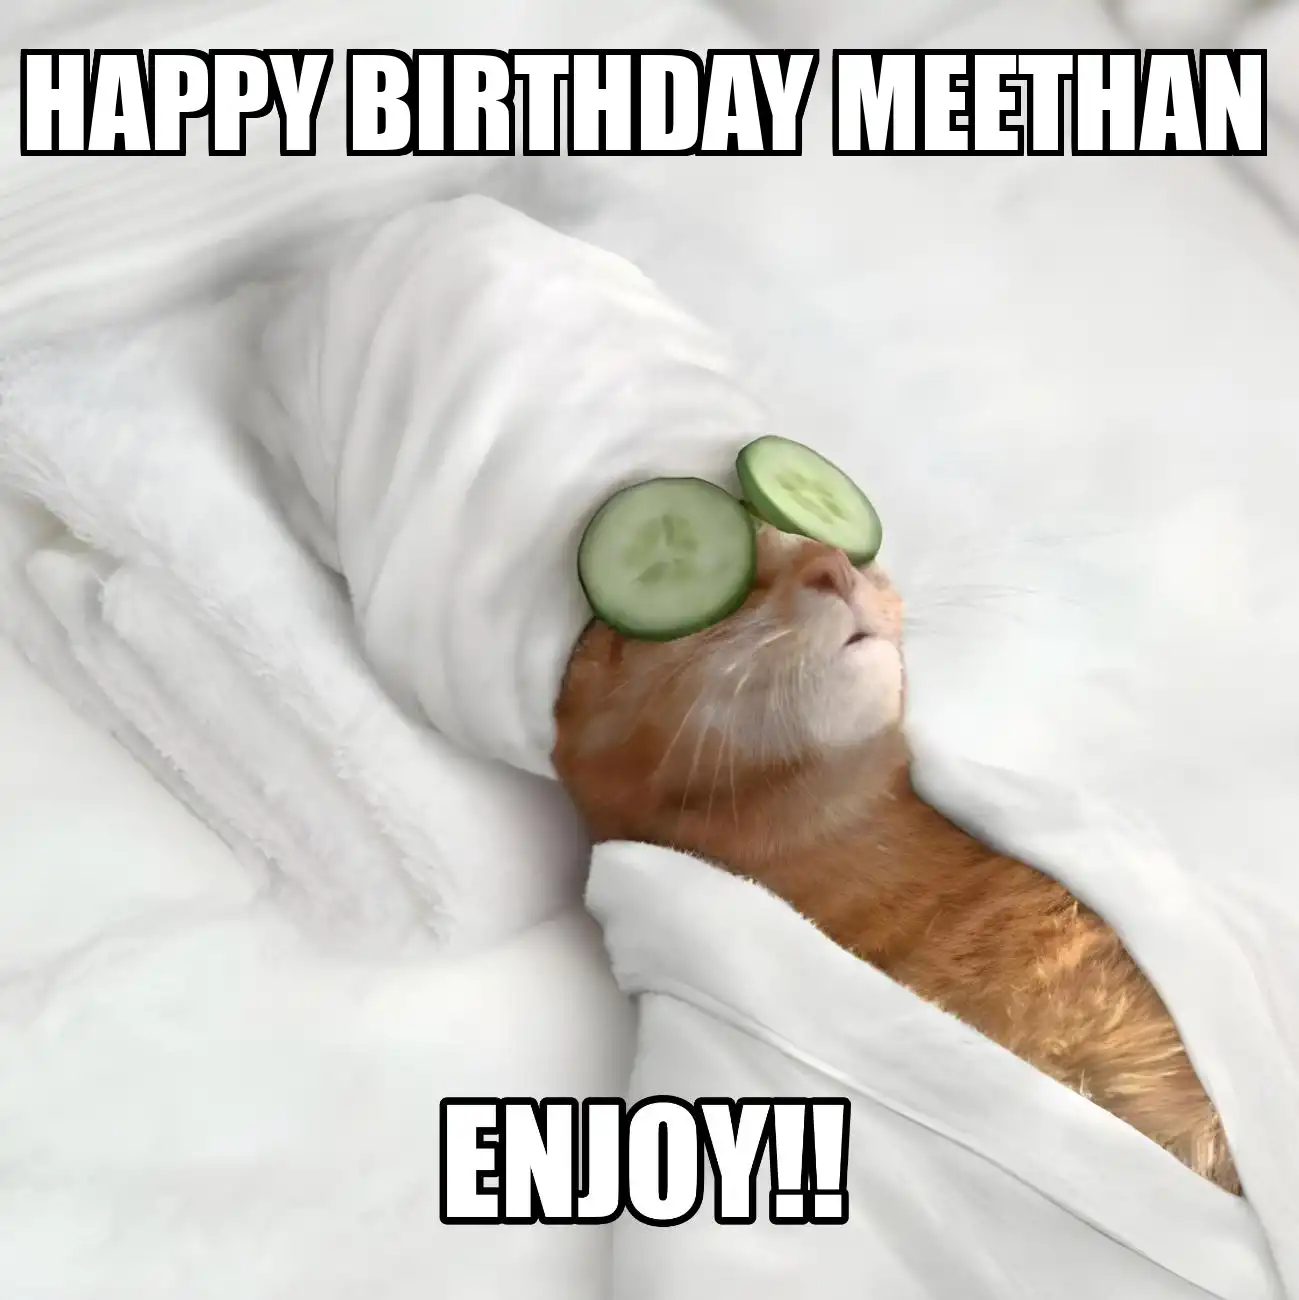 Happy Birthday Meethan Enjoy Cat Meme